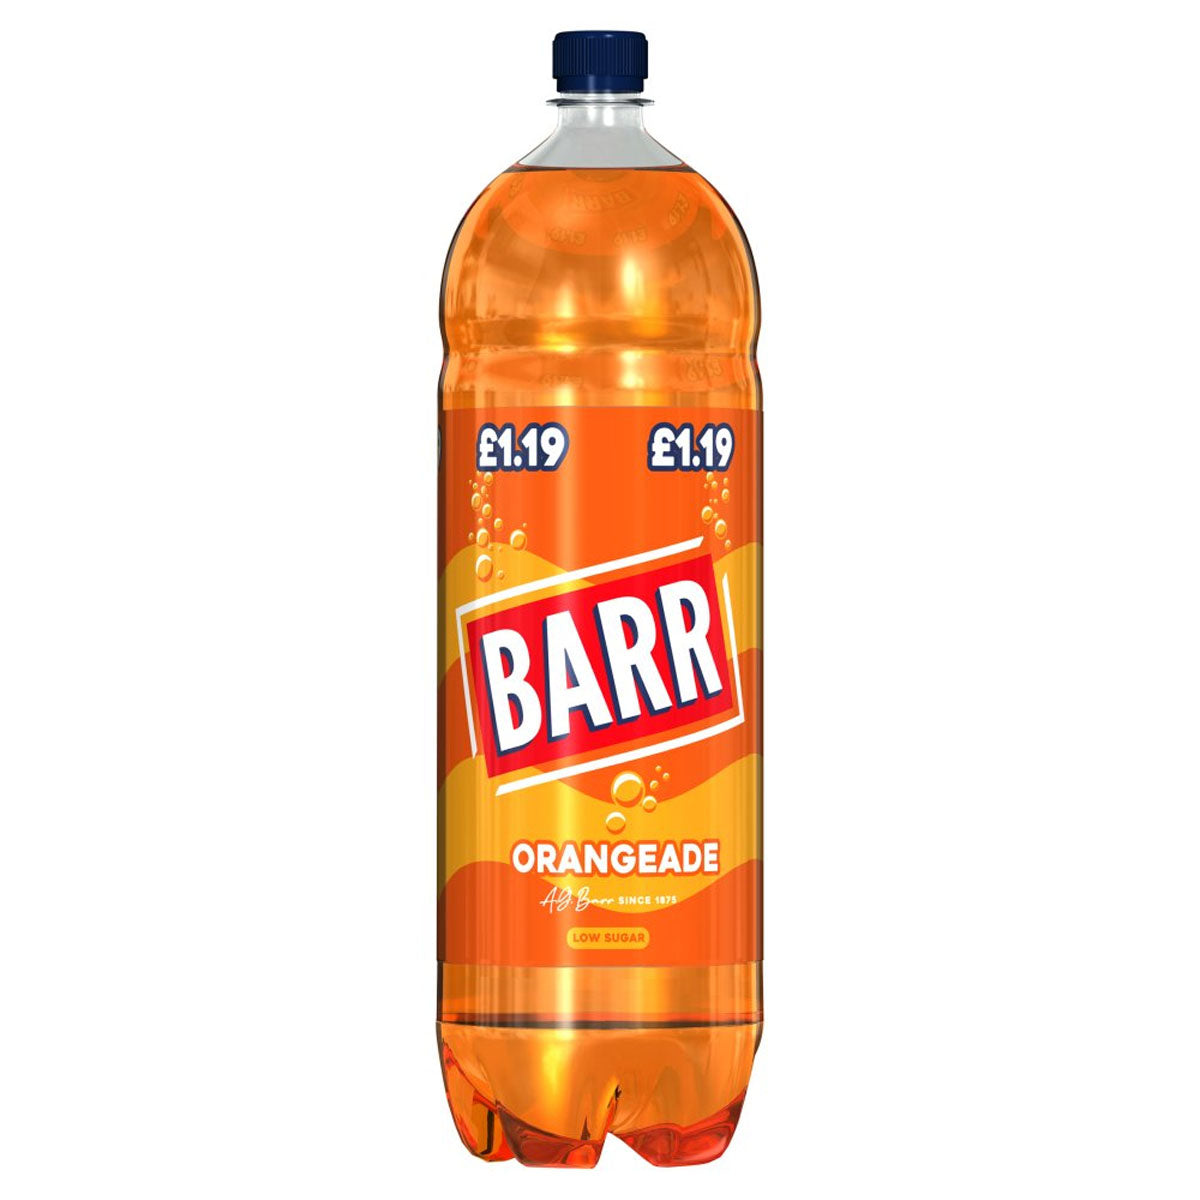 A bottle of Barr - Orangeade Soft Drink - 2L on a white background.